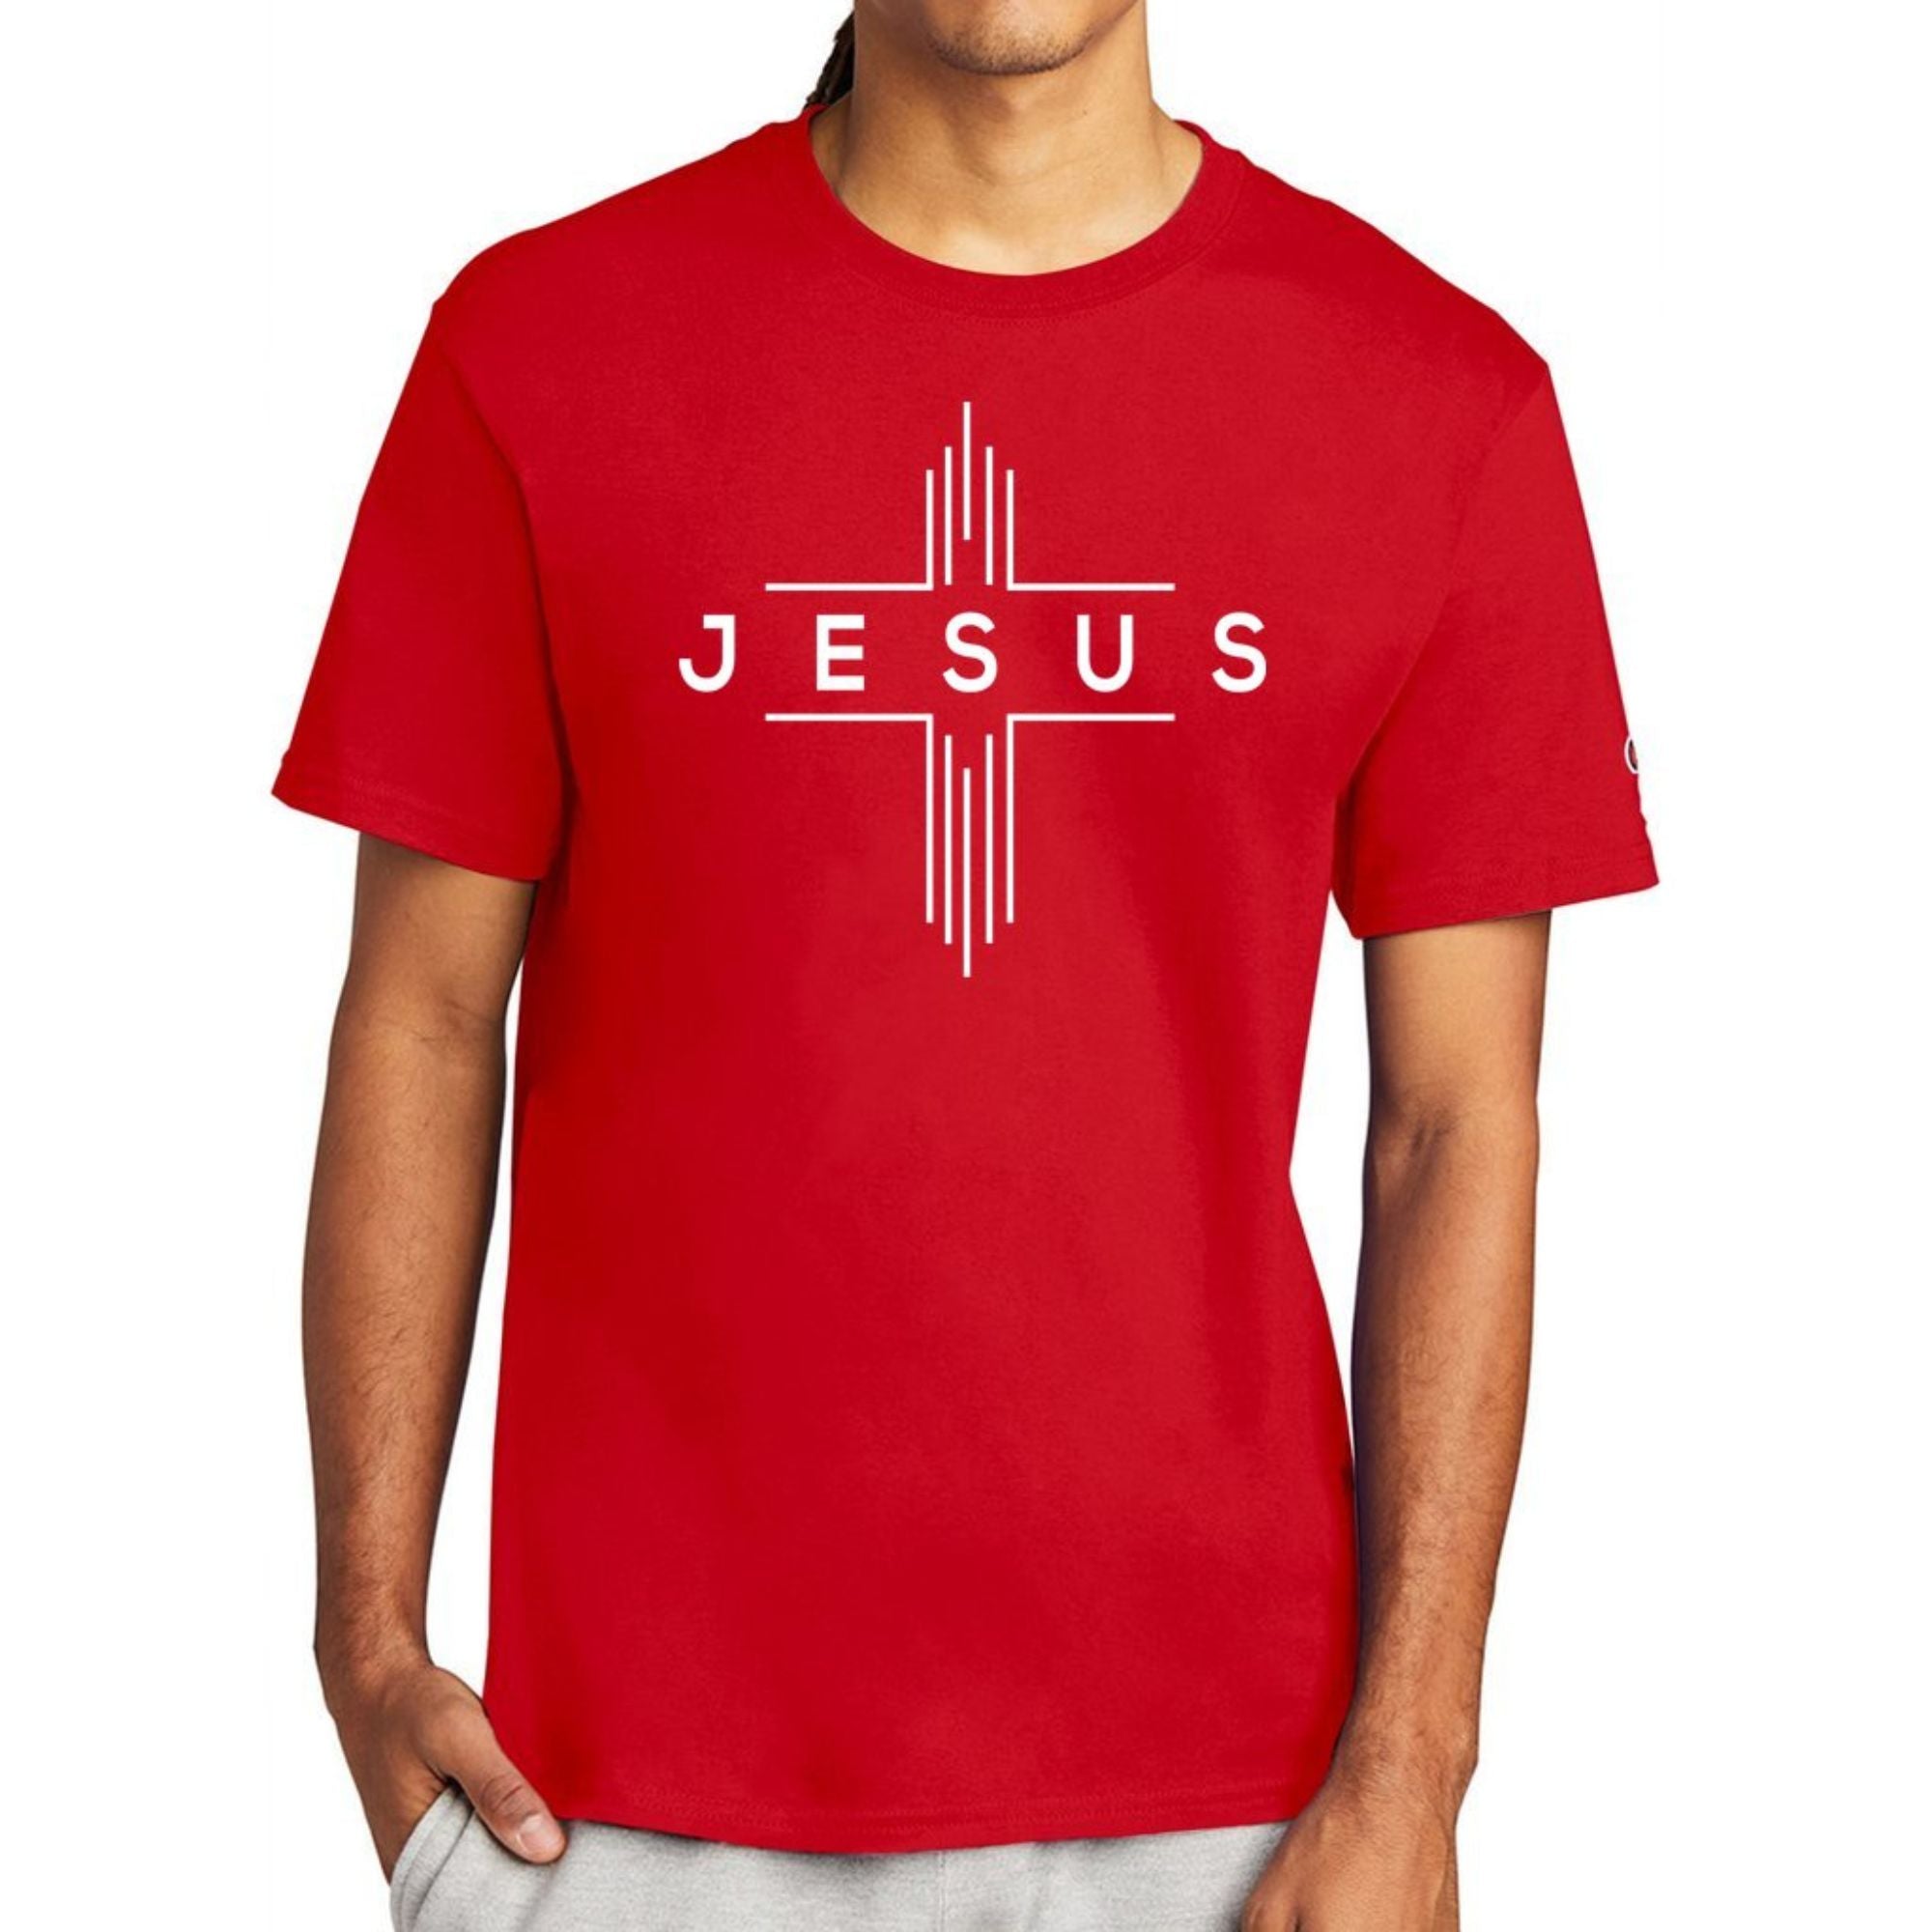 Jesus Cheveron Cross Women's Unisex Champion T-shirt - Black / Red - Matching Joggers Available Size: S Color: Black Jesus Passion Apparel